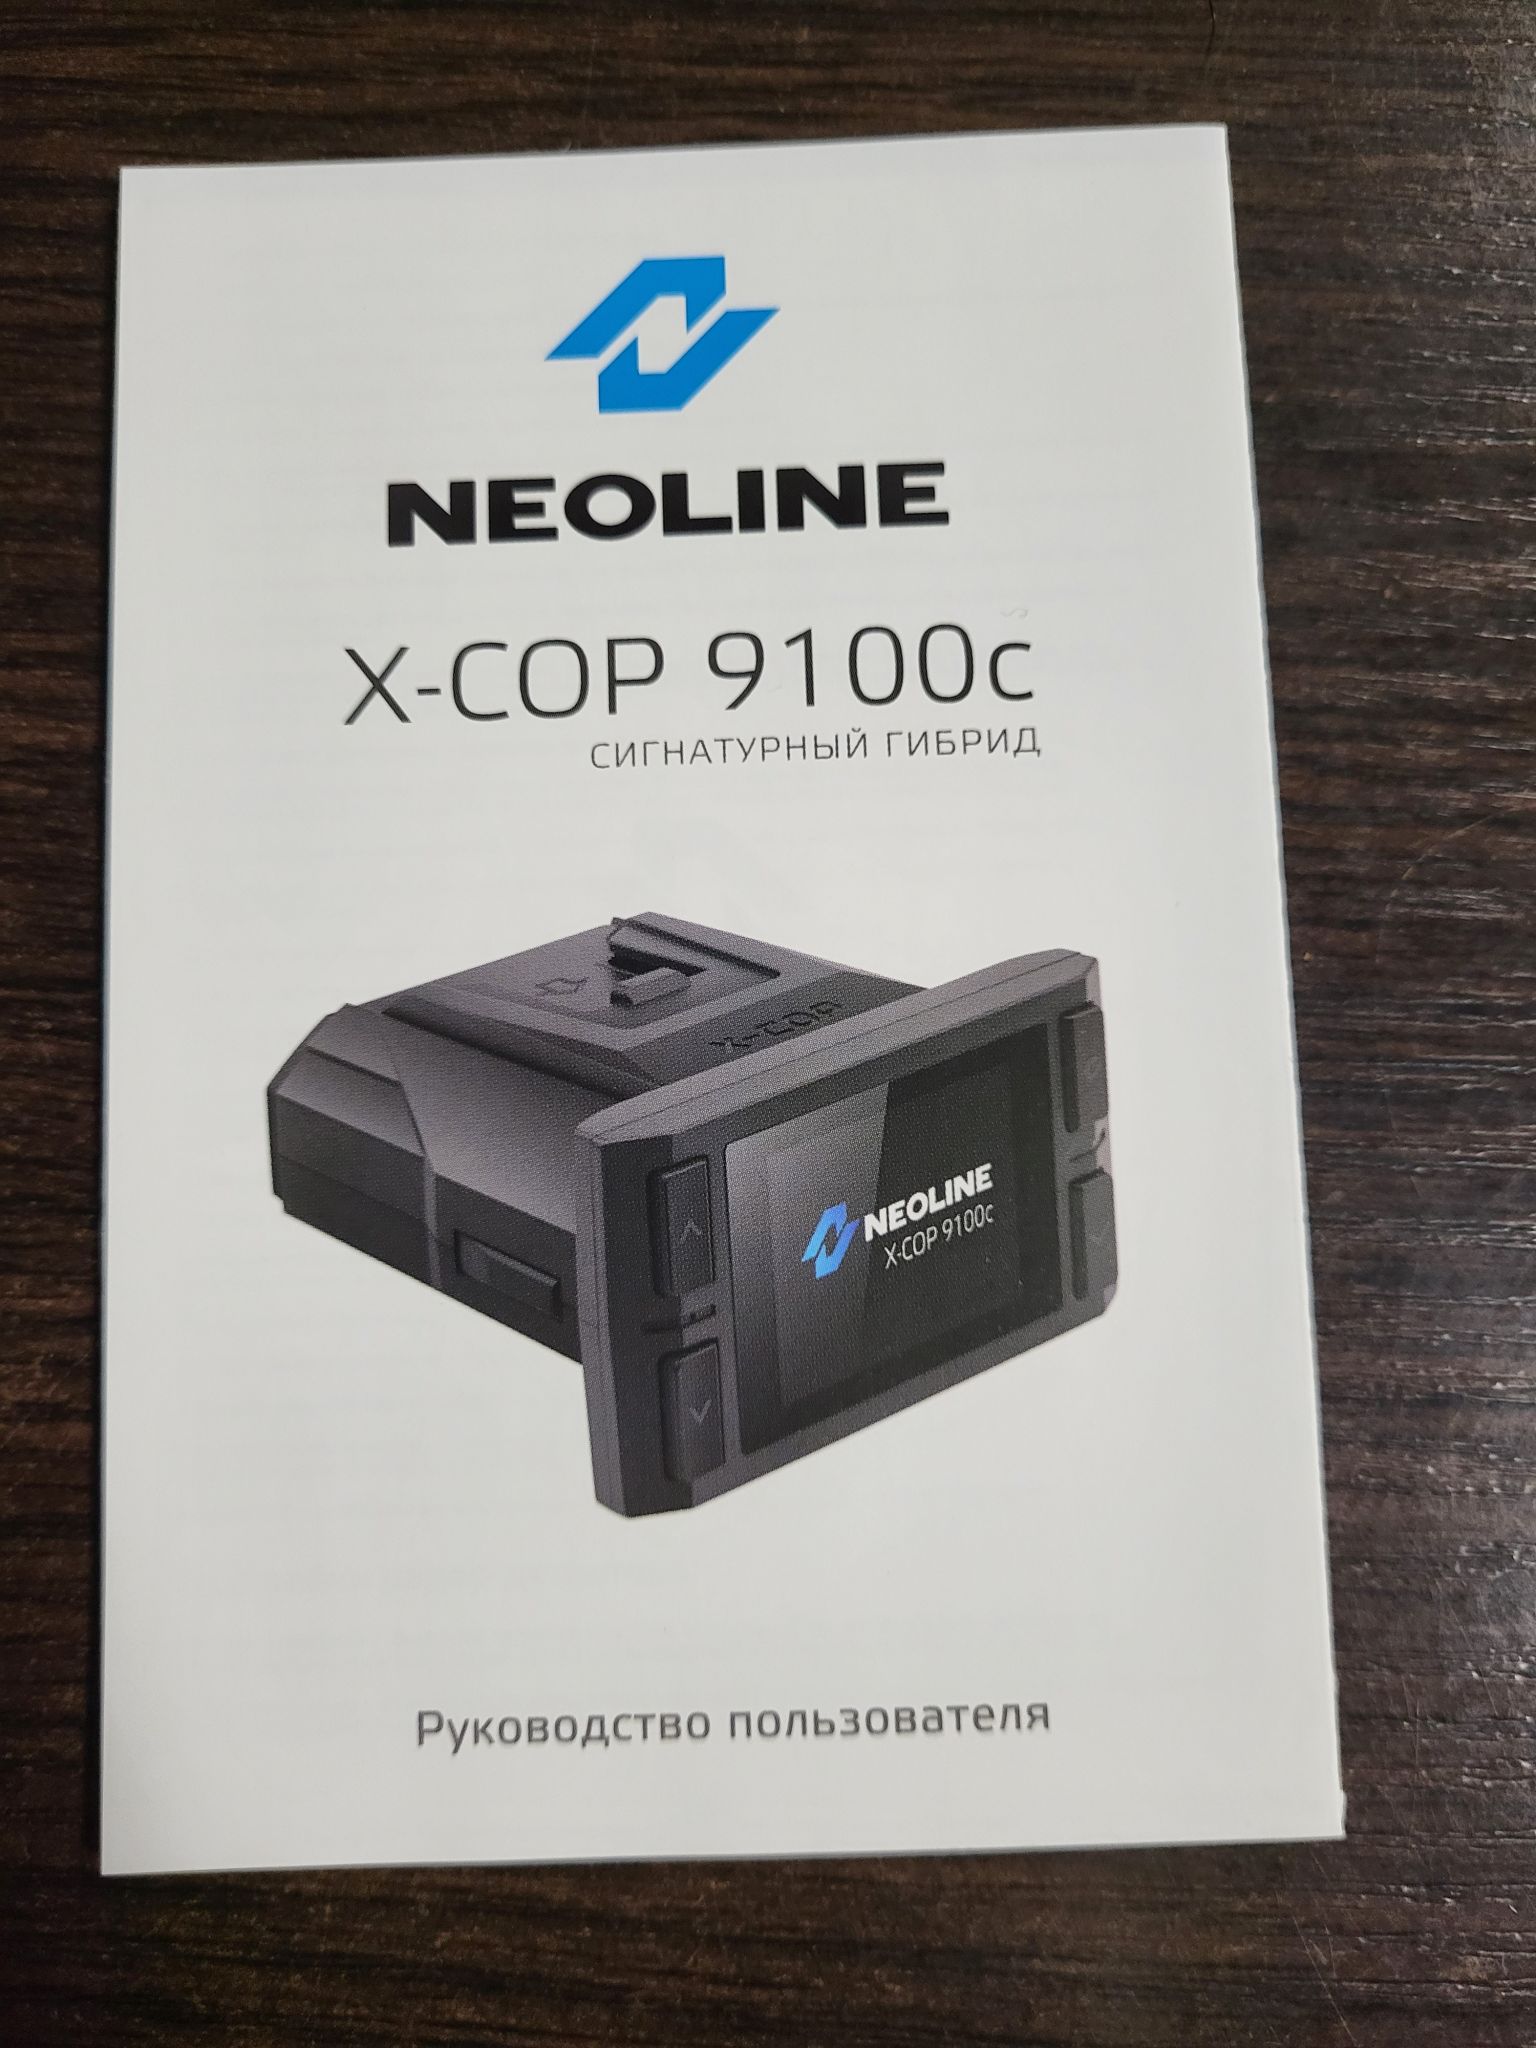 Neoline x cop 9100c. Неолайн 9100. Neoline x-cop 9100d. Крепление для Neoline x-cop 9100c. Плата Neoline 7700 p.